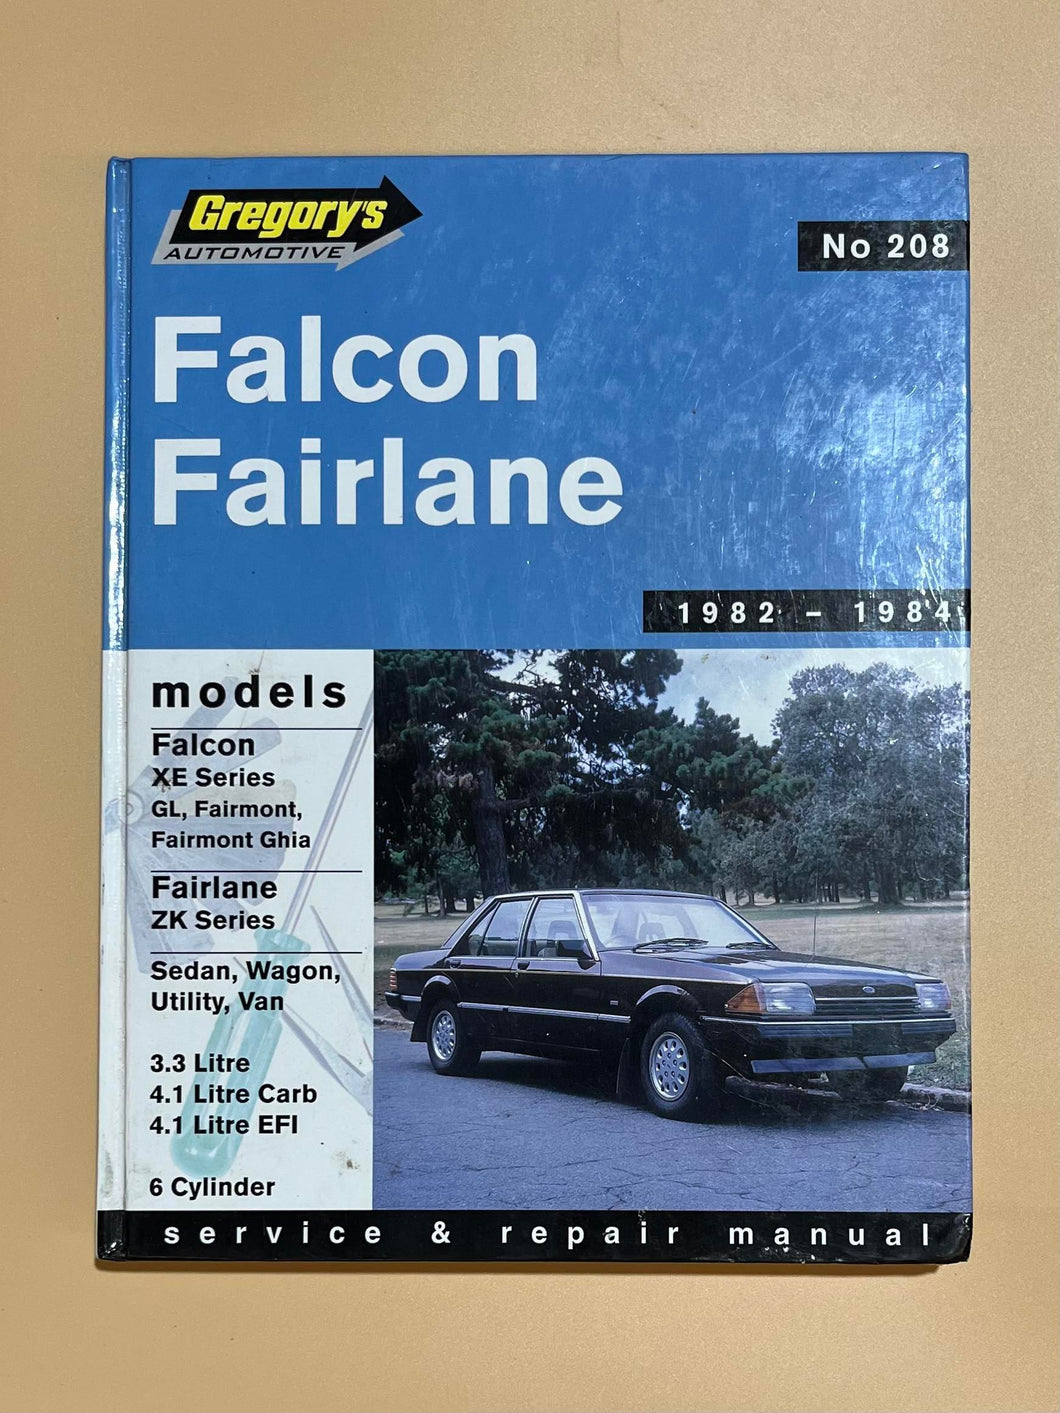 Falcon Fairlane 1982-1984 Service and Repair Manual